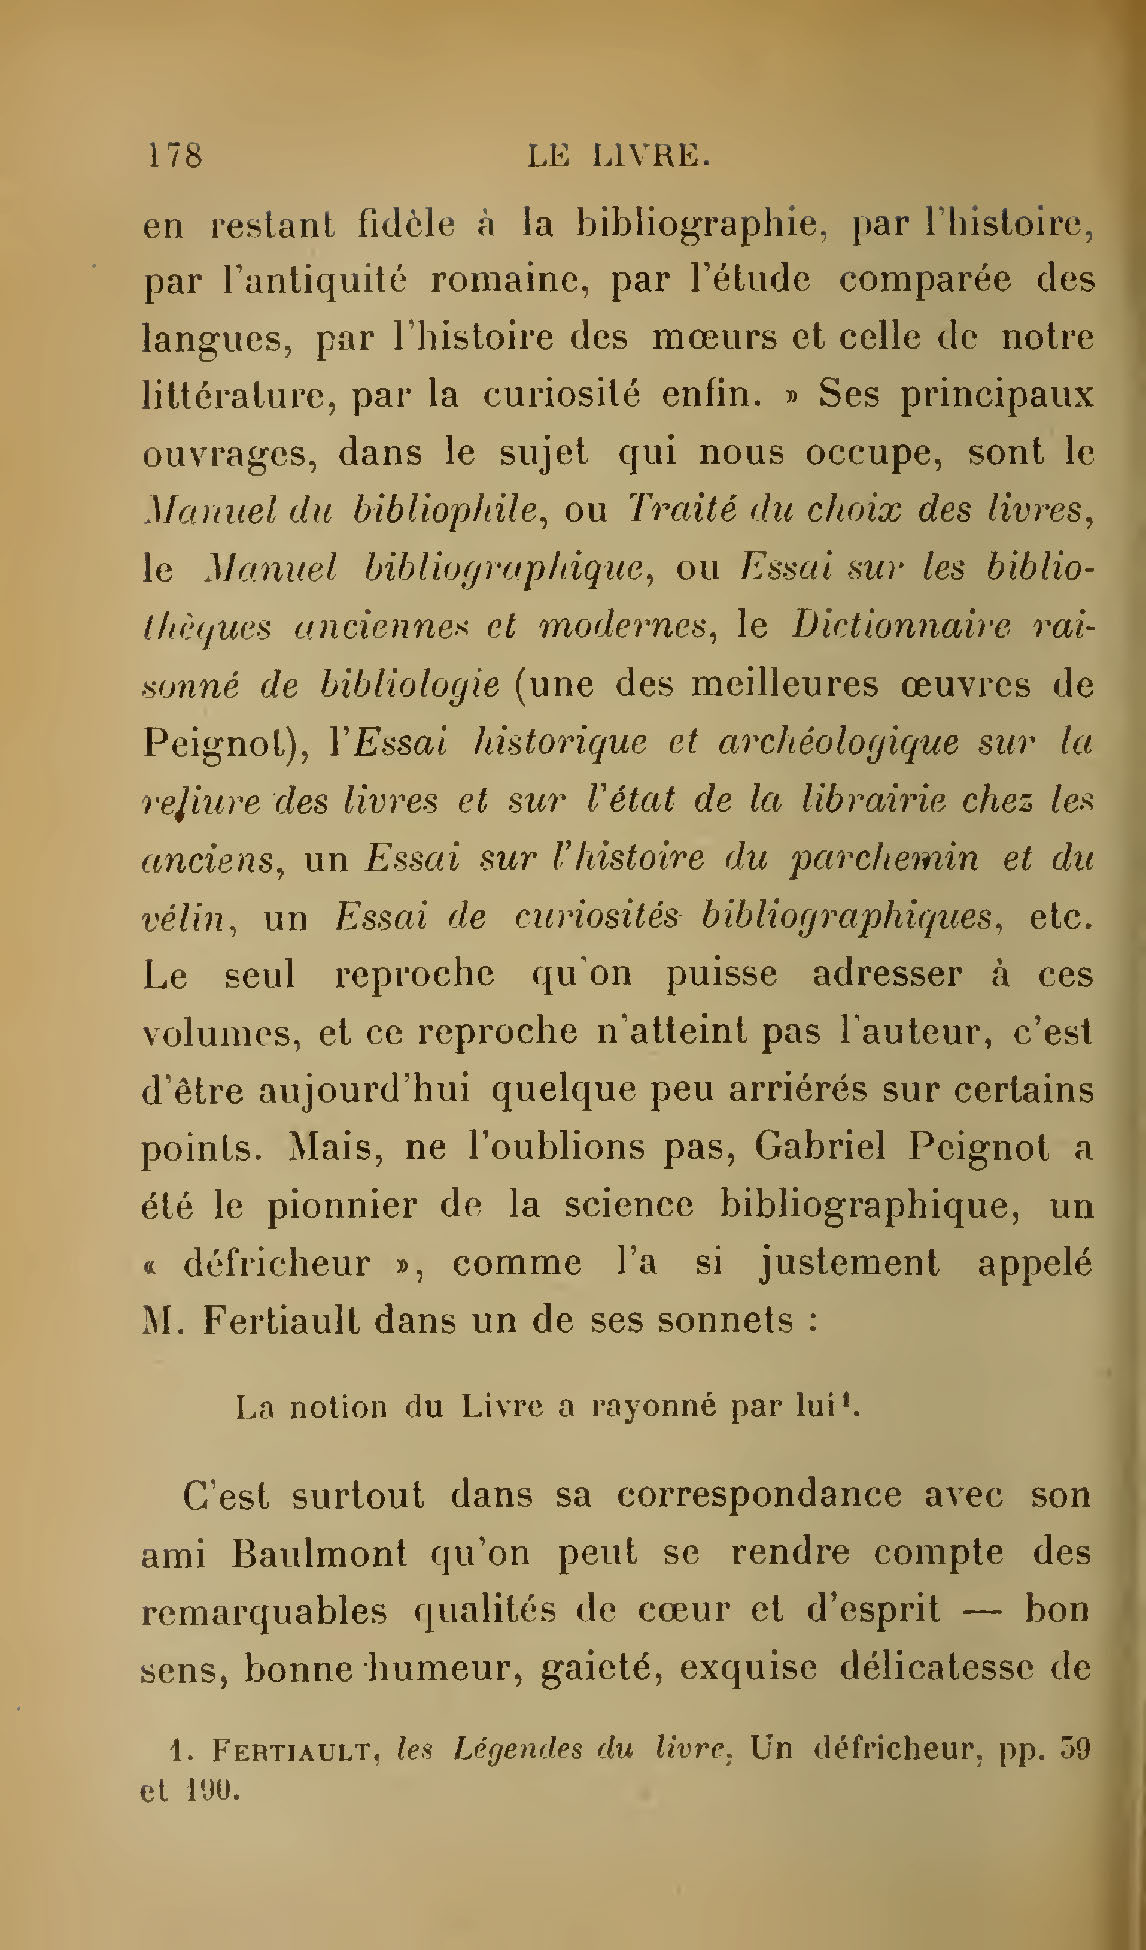 Albert Cim, Le Livre, t. I, p. 178.